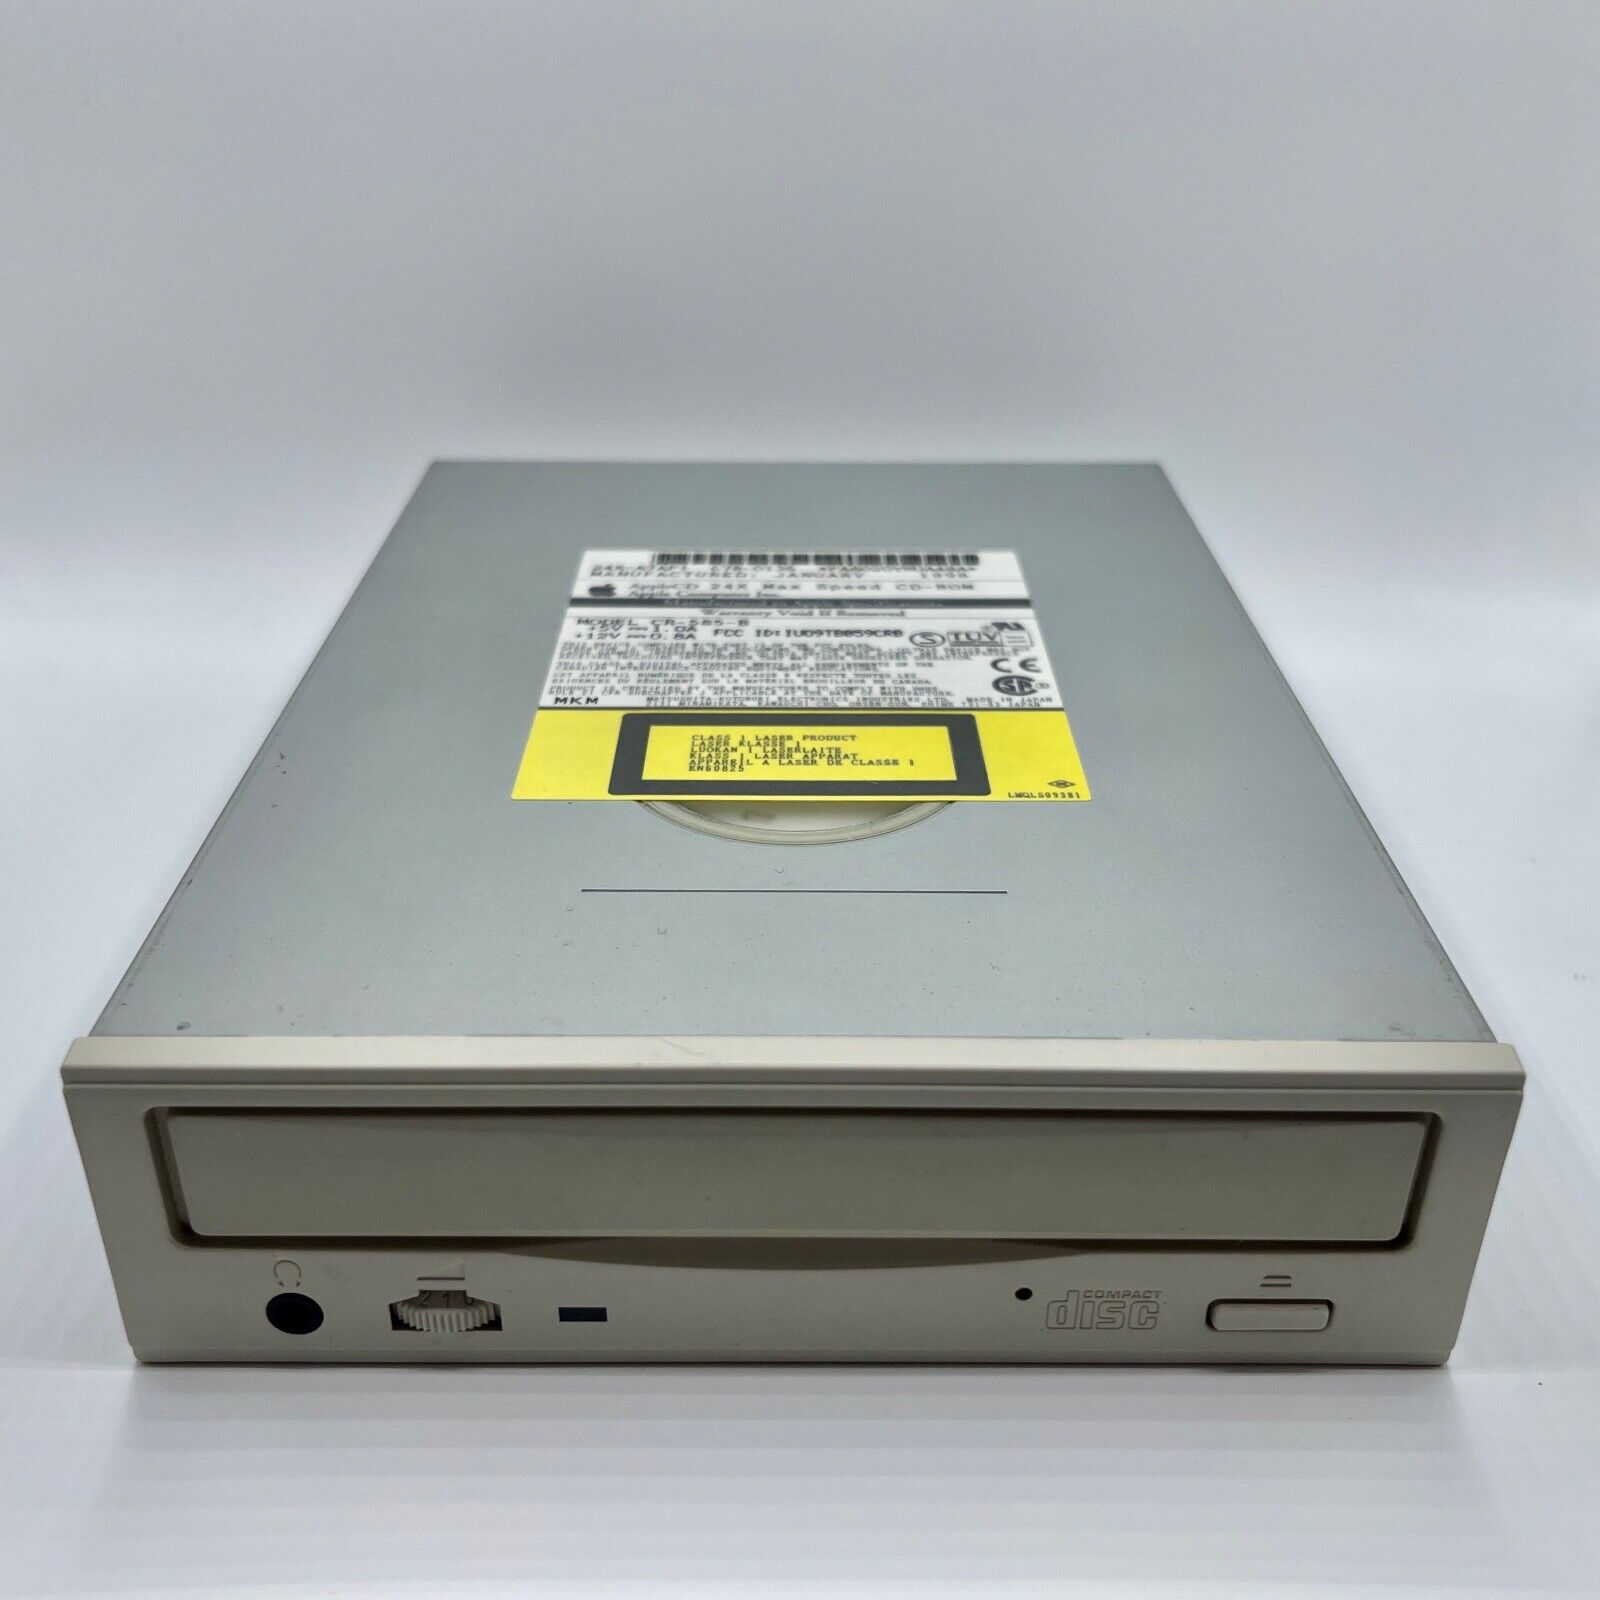 Vintage Apple 24X-ATAP1 CD-ROM Drive Model CR-585-B 678-0136 IDE